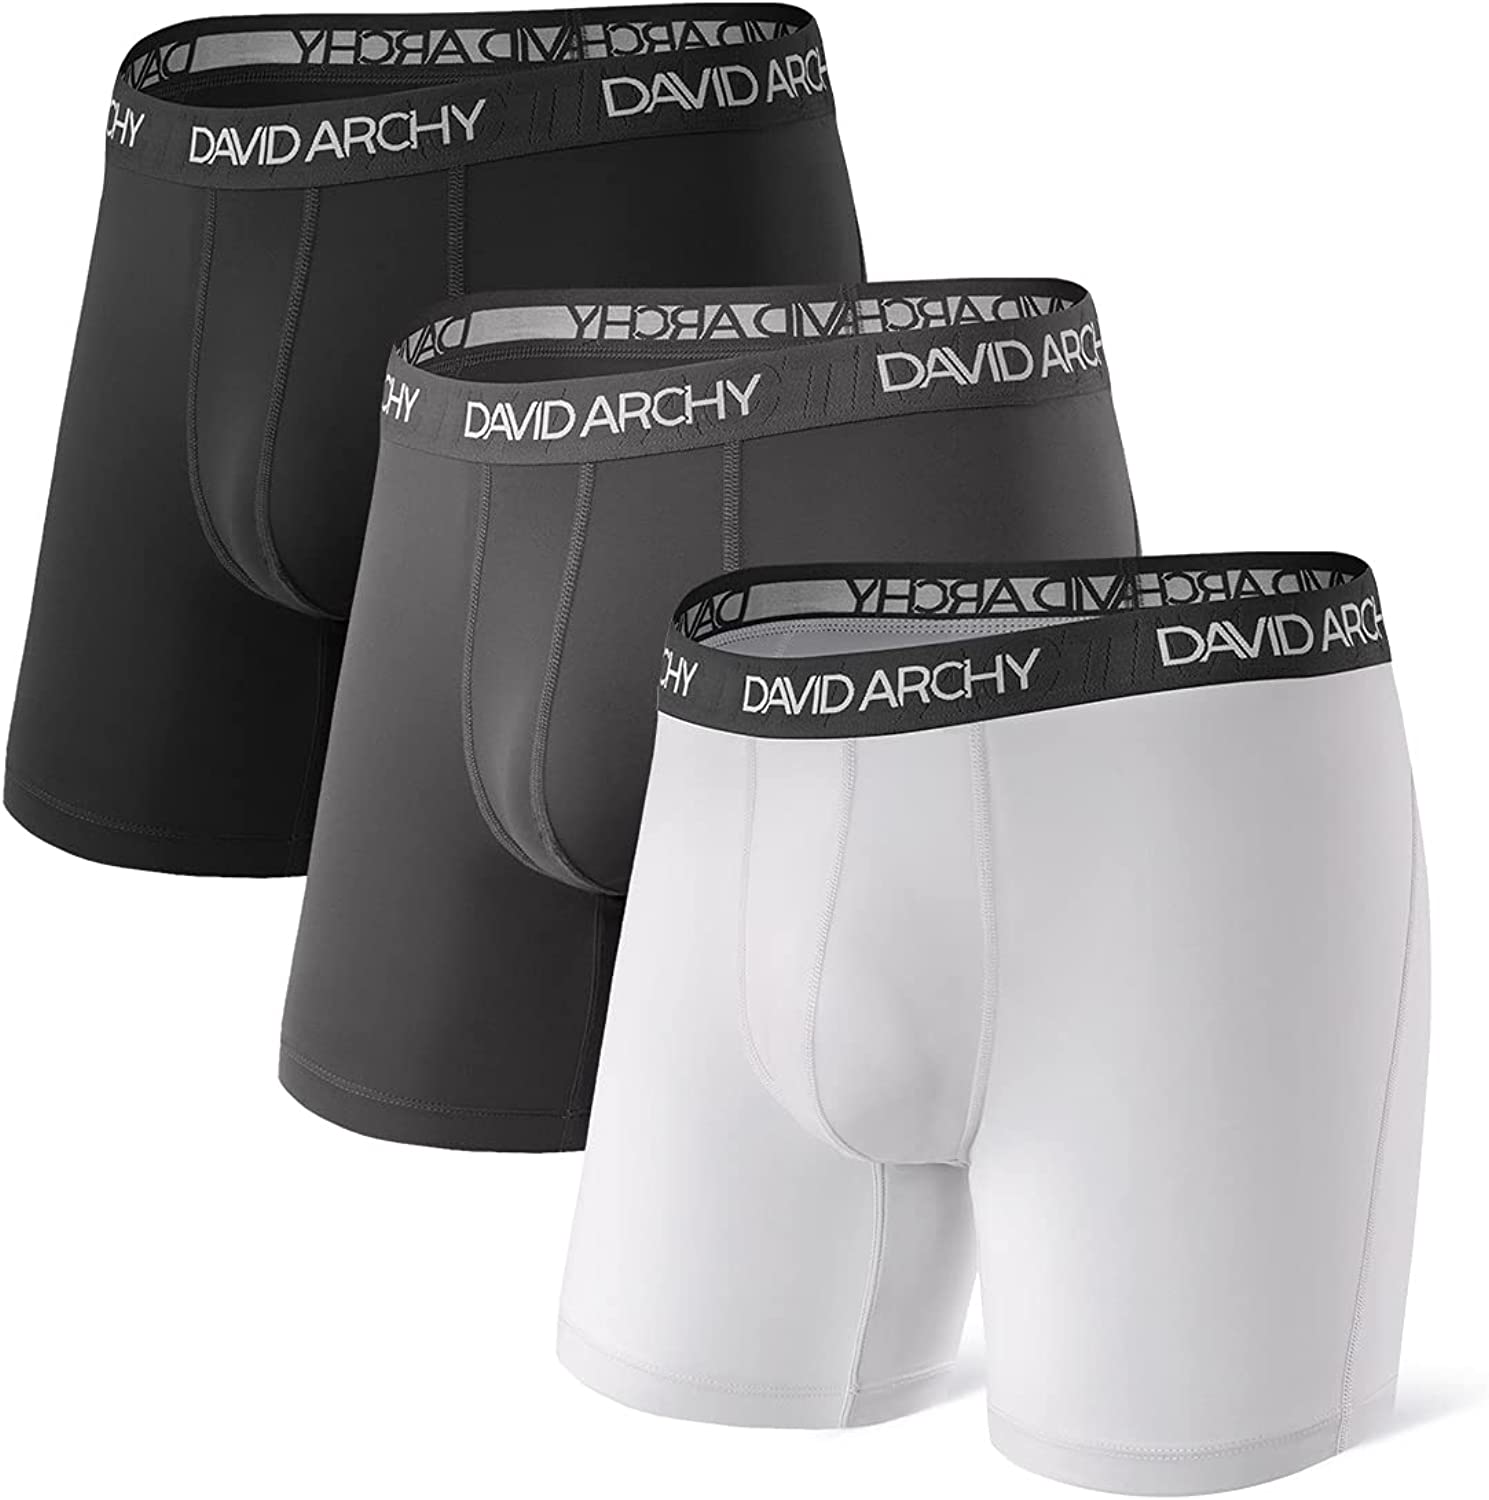 DAVID ARCHY 3 Pack Men's Ultra Soft Mesh Quick Dry Sports